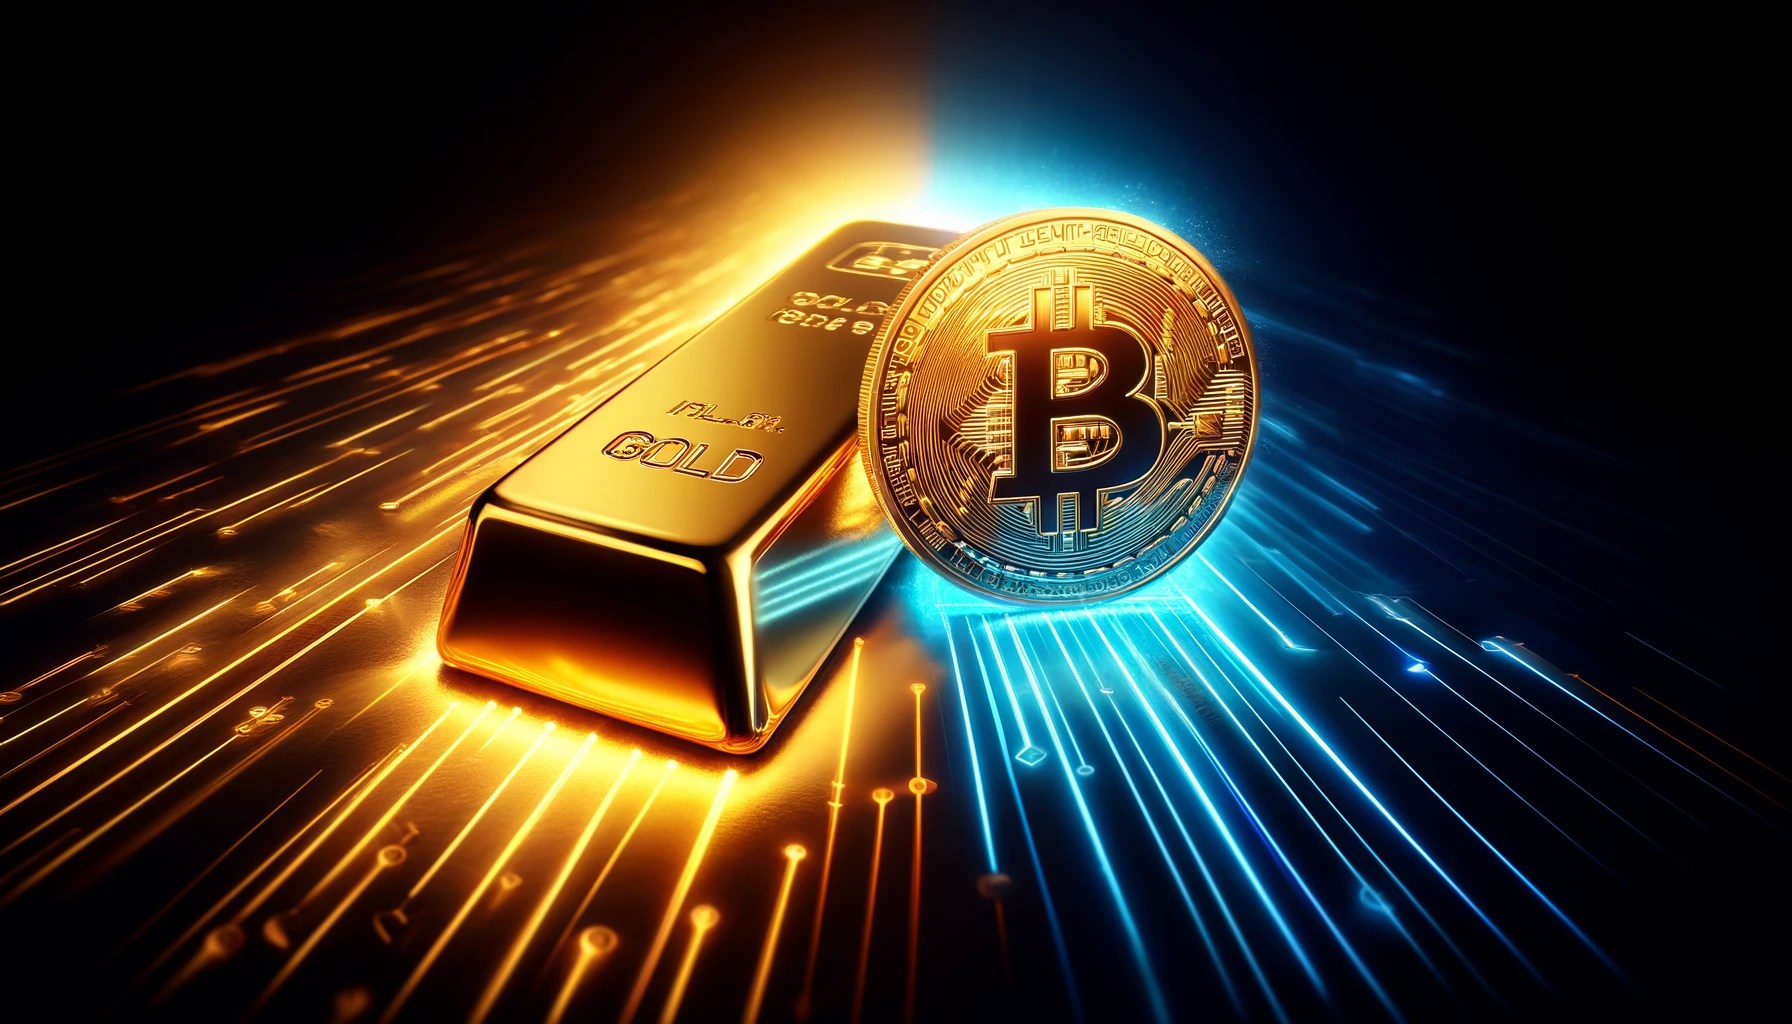 Gold Bitcoin price